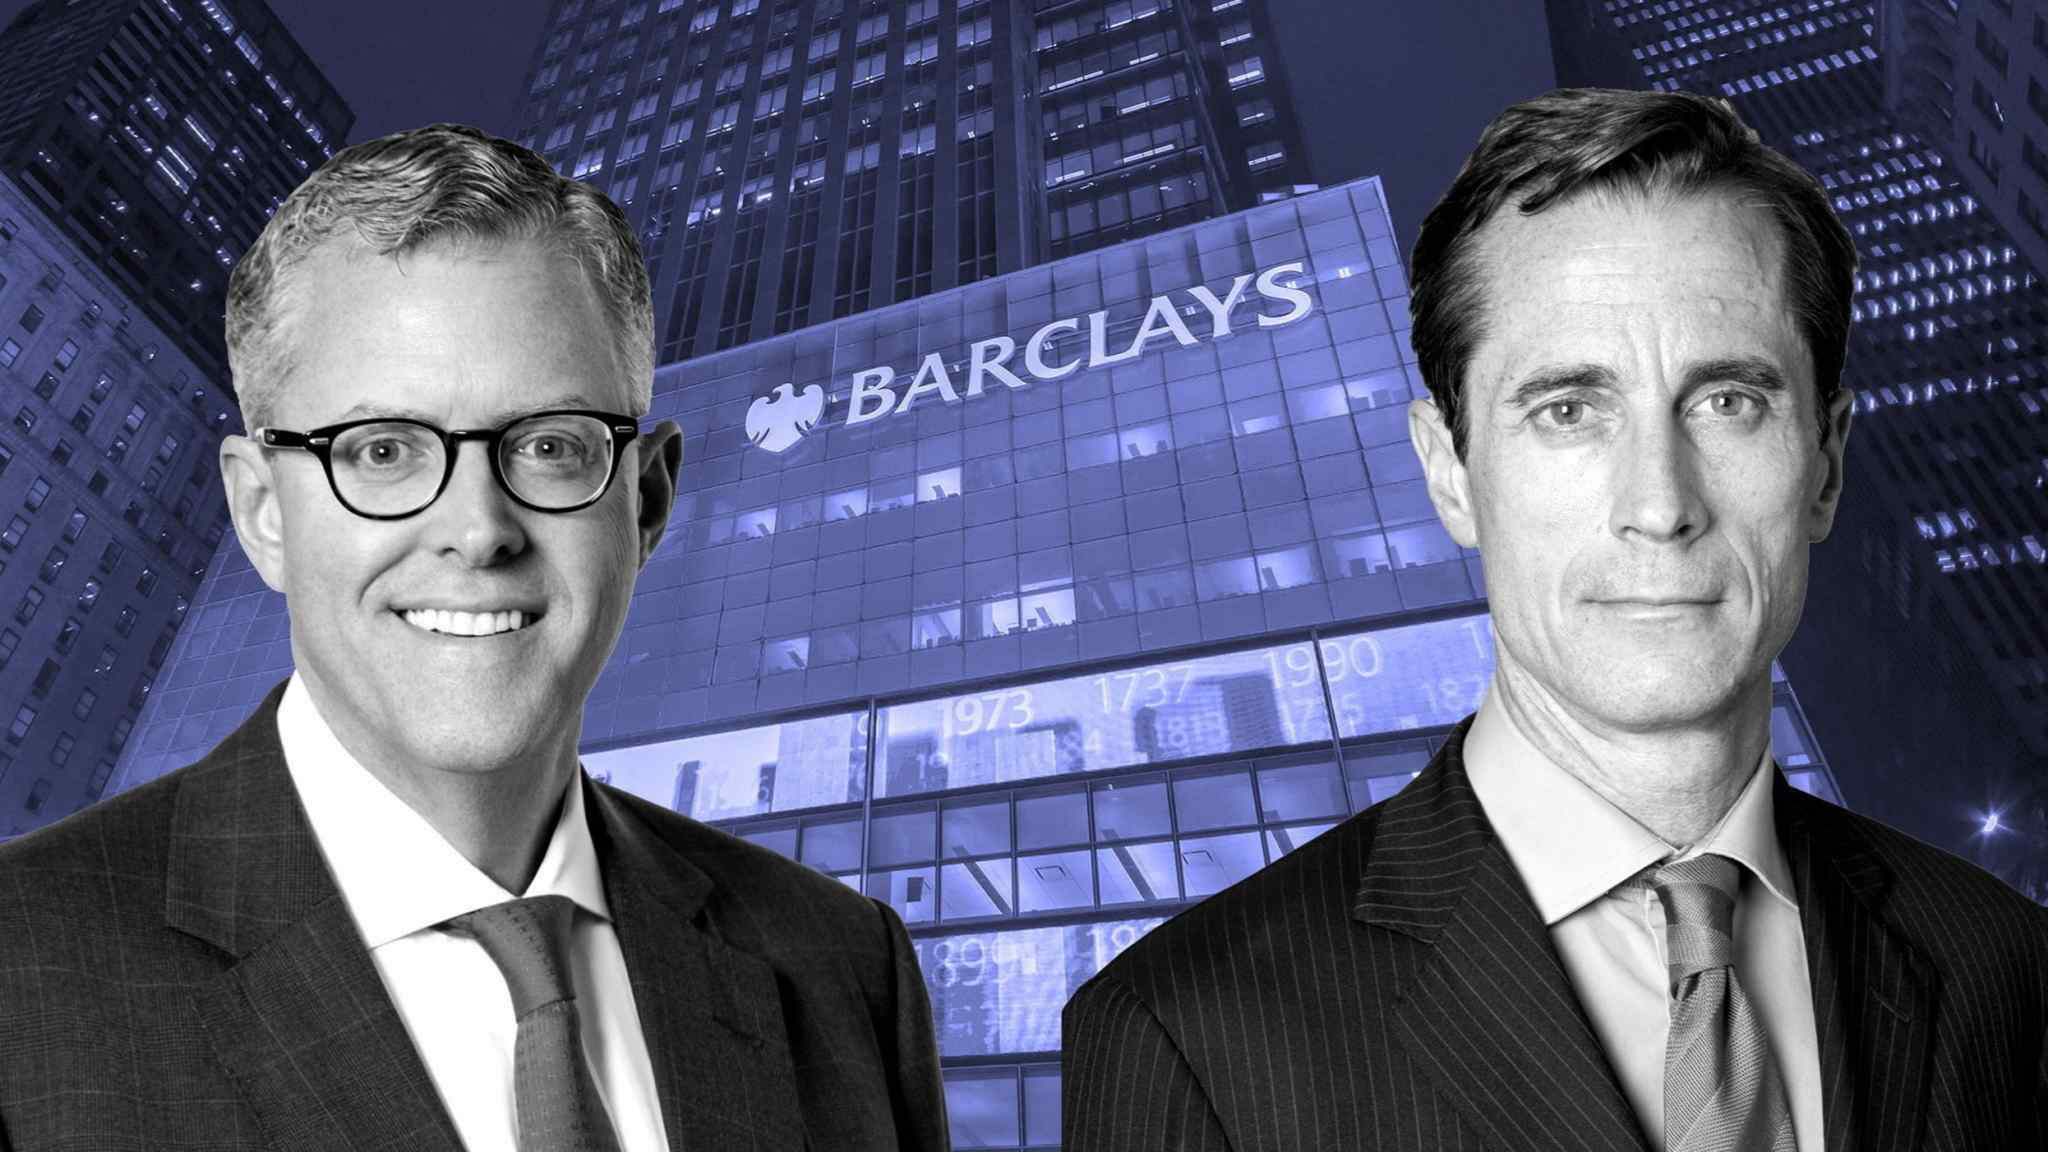 Barclays warns former staff in bid to stem investment bank exodus